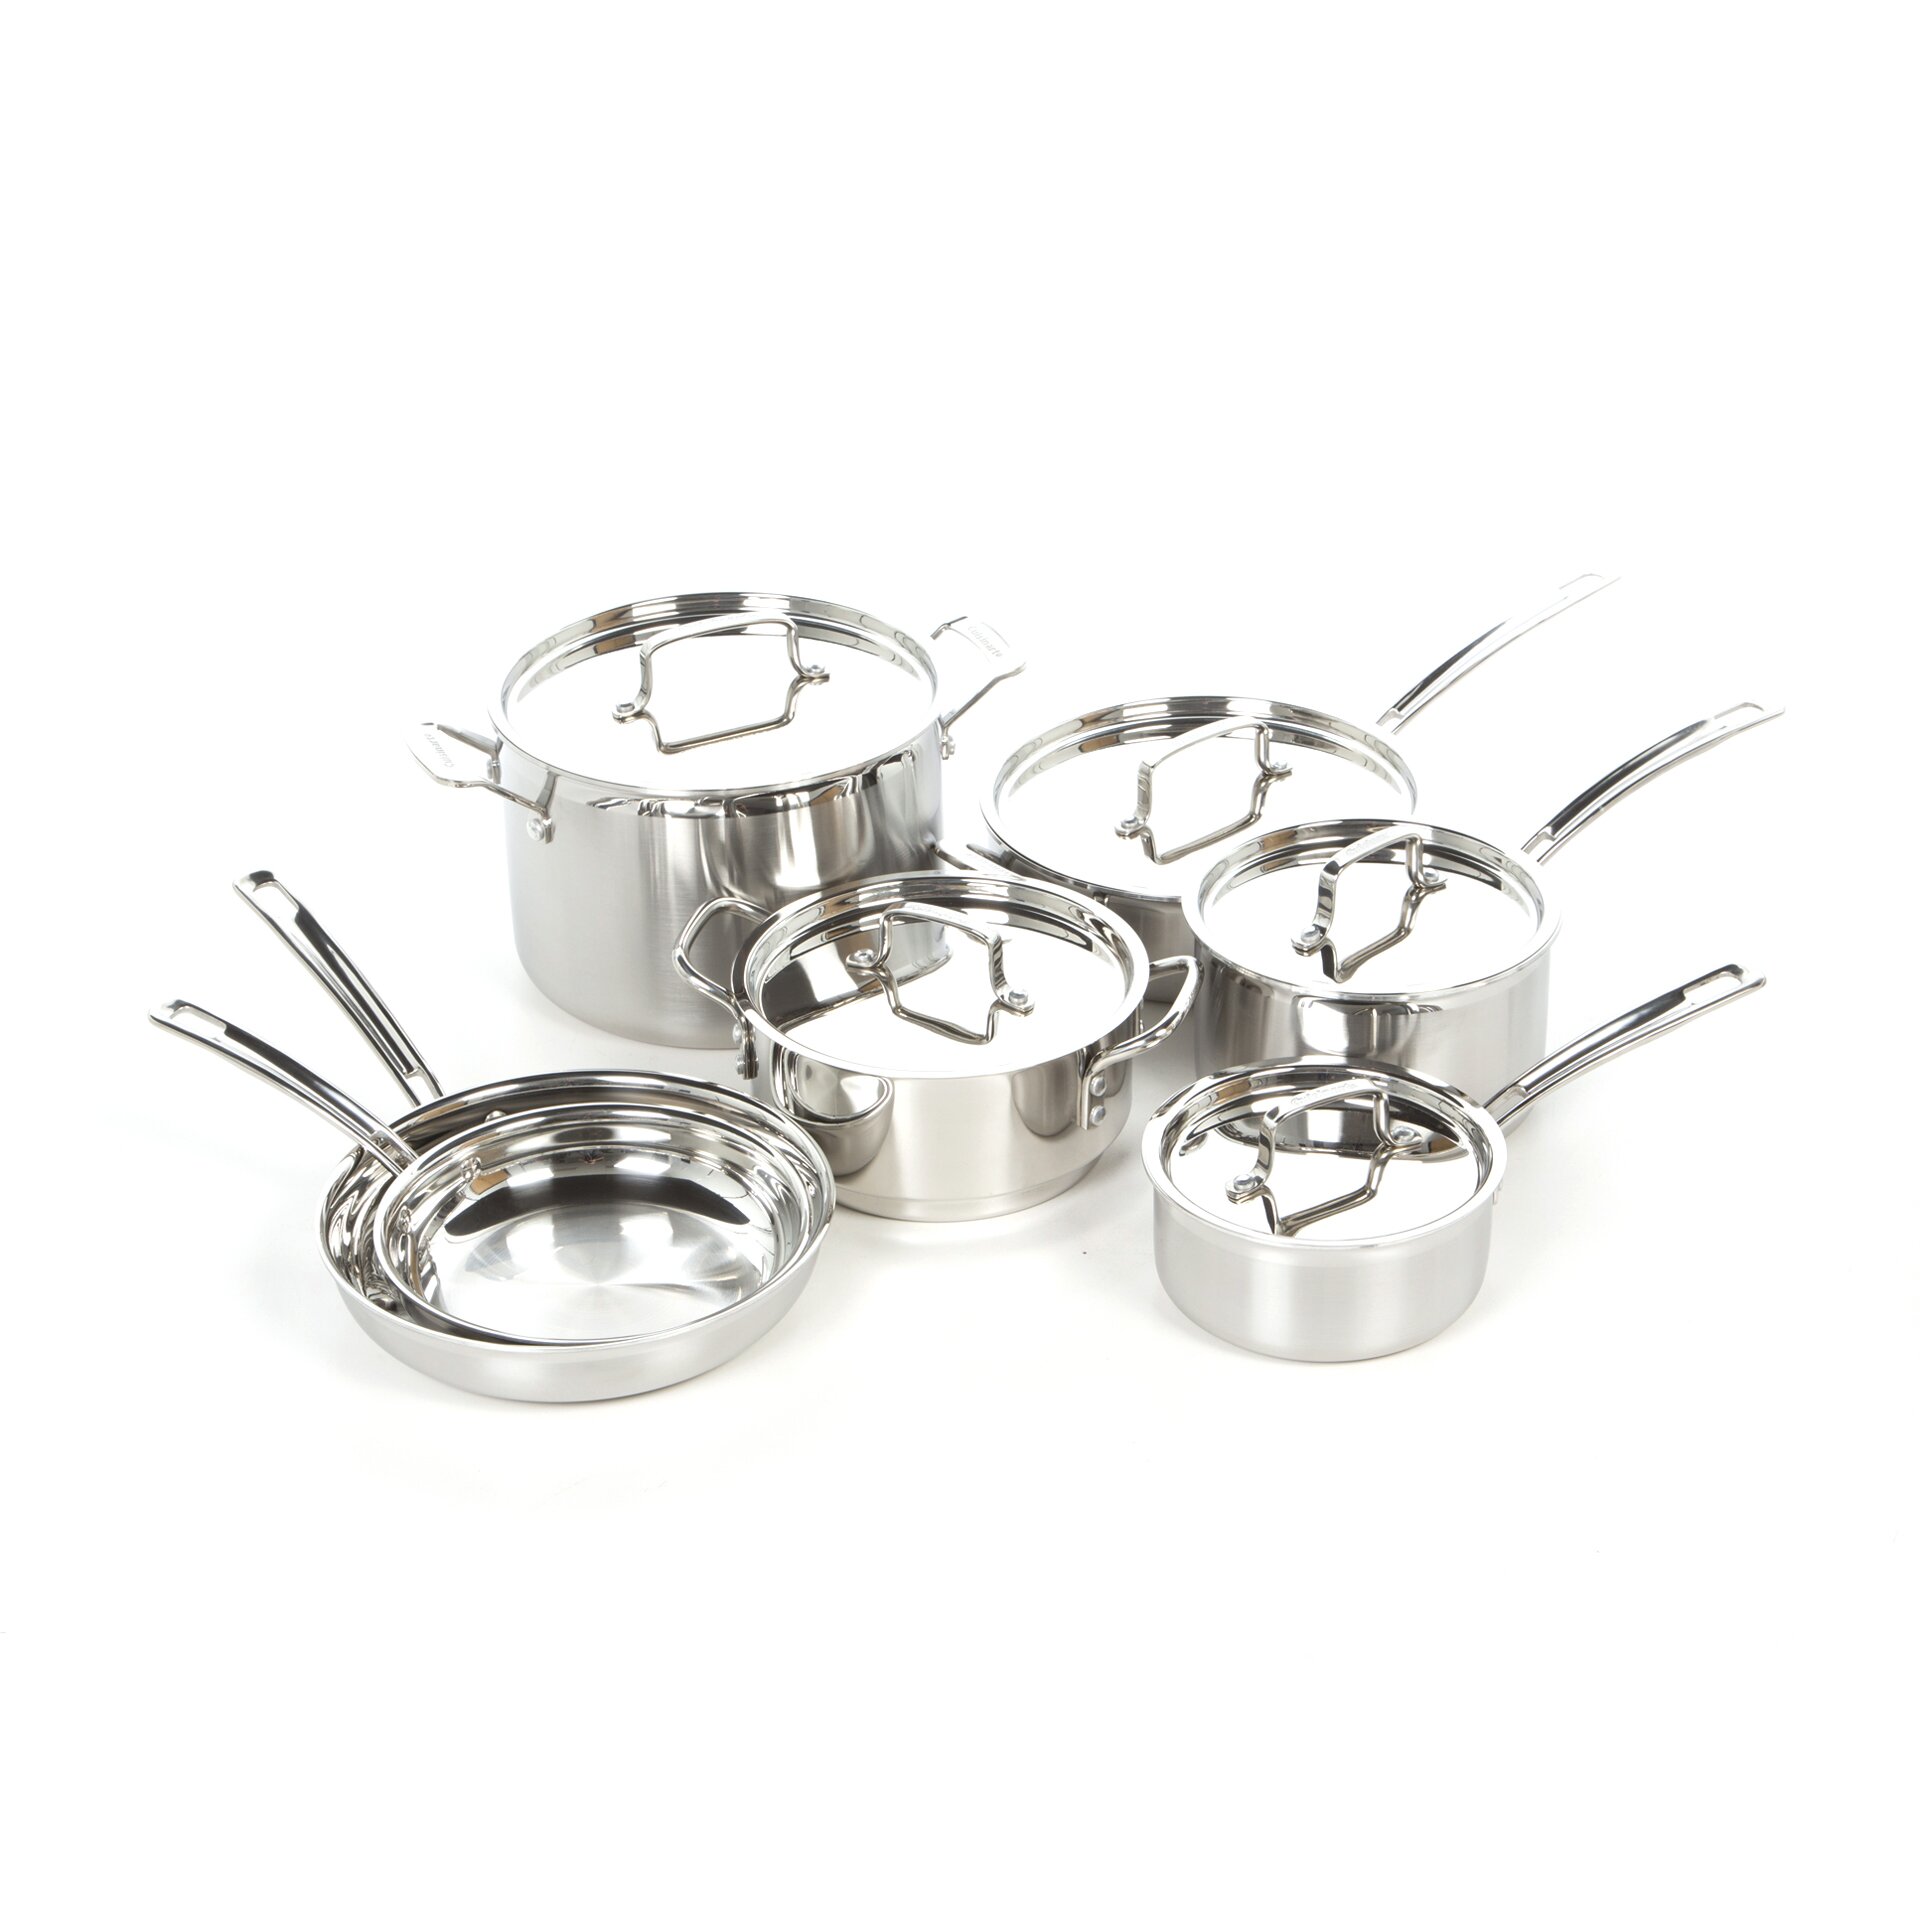 Cuisinart Multiclad Pro Stainless Steel 12-Piece Cookware Set & Reviews Cuisinart Multiclad Pro Stainless Steel 12-piece Cookware Set